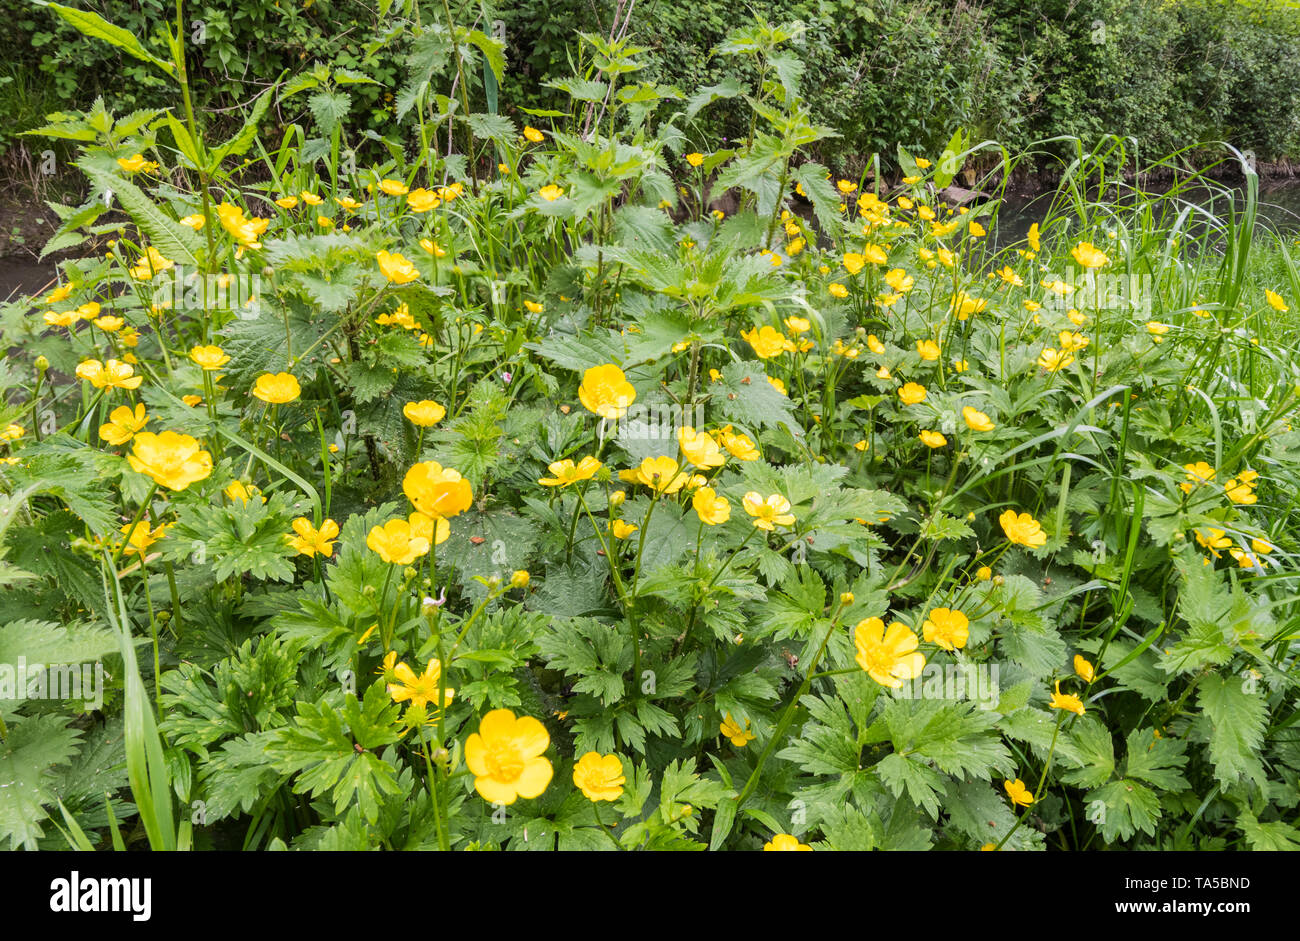 La renoncule rampante (Ranunculus repens, AKA Creeping crowfoot & Sitfast) au printemps en Angleterre, Royaume-Uni. Renoncules jaunes. Banque D'Images